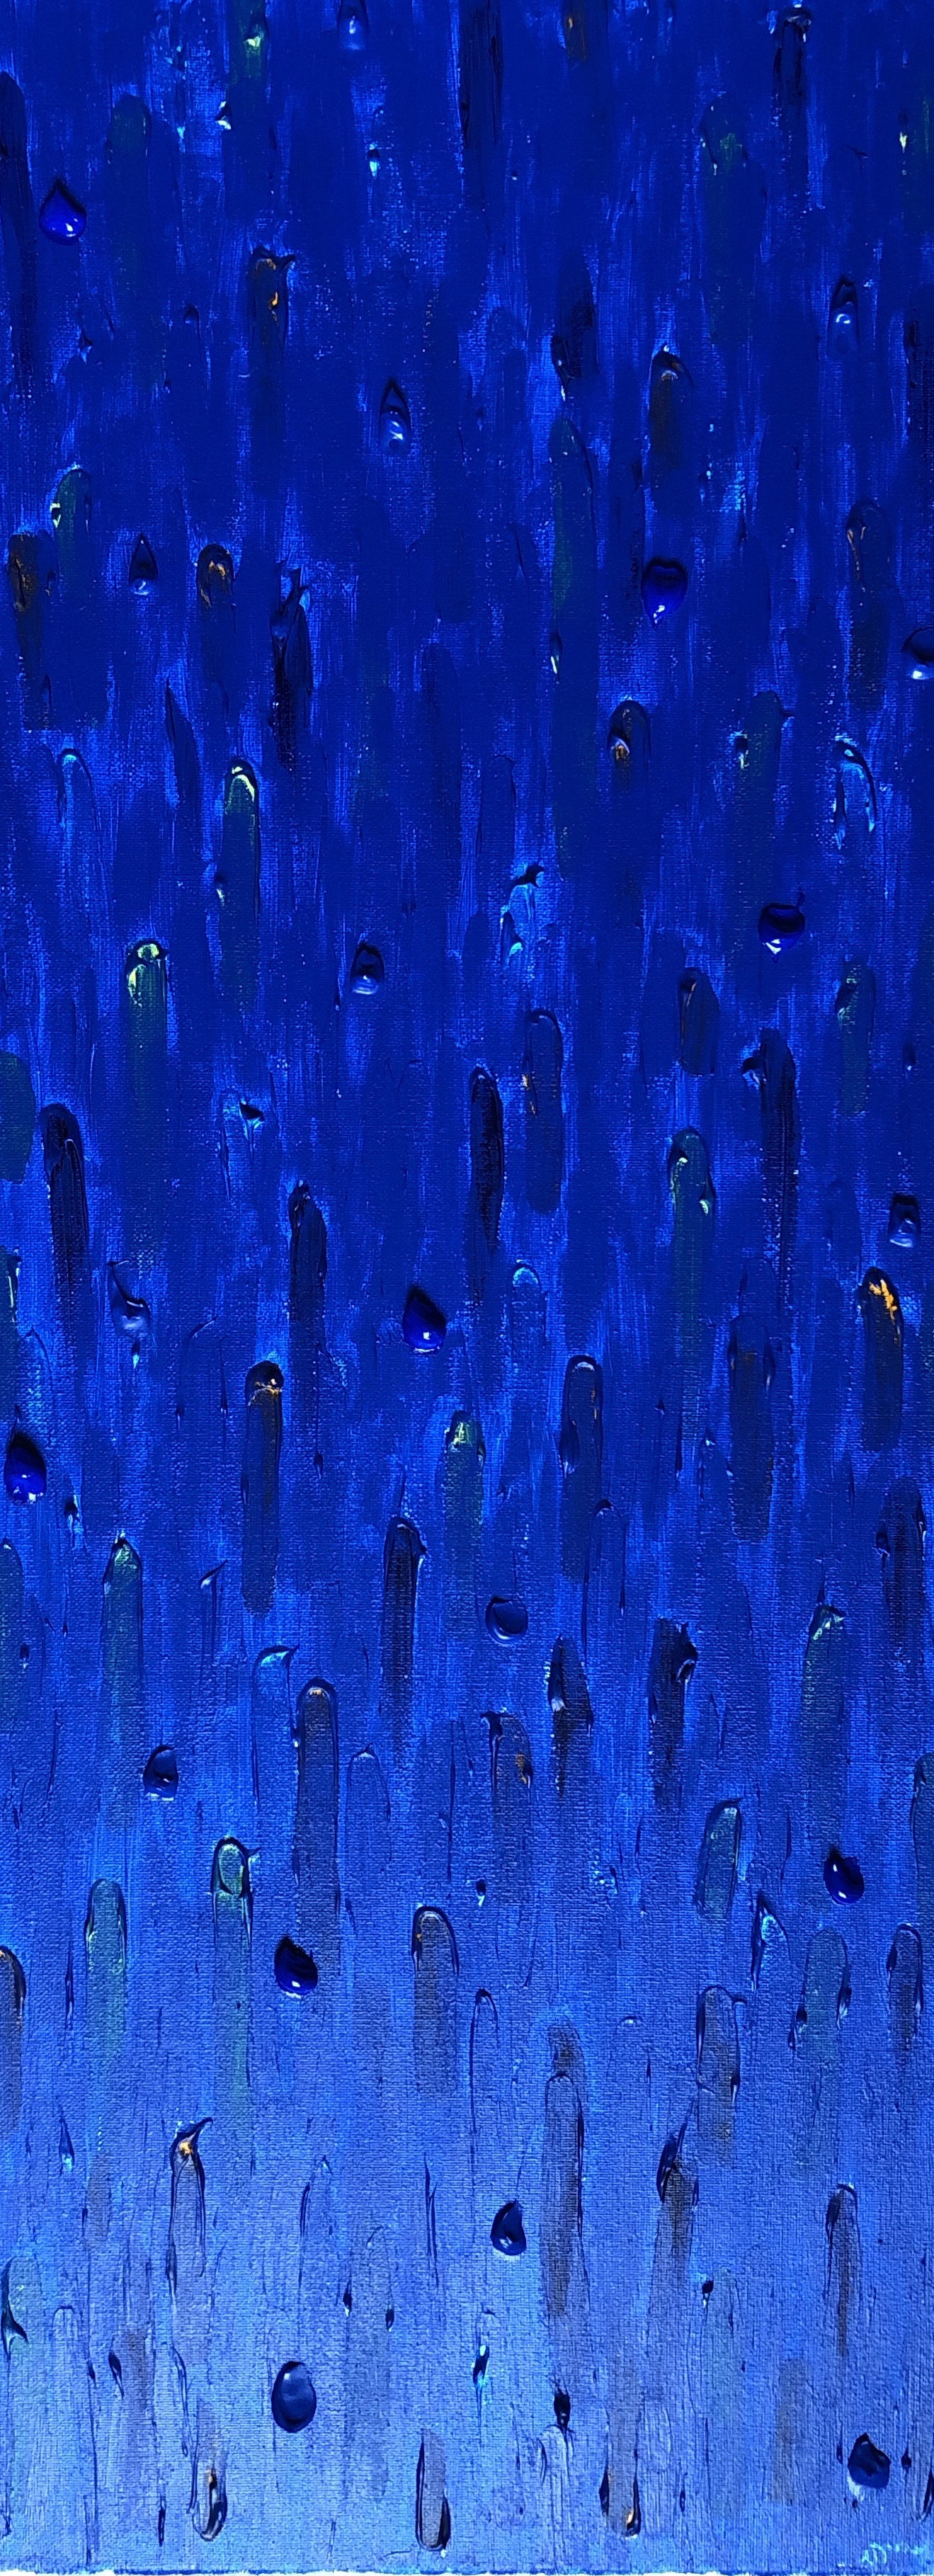 Blue Rain Full View.jpg